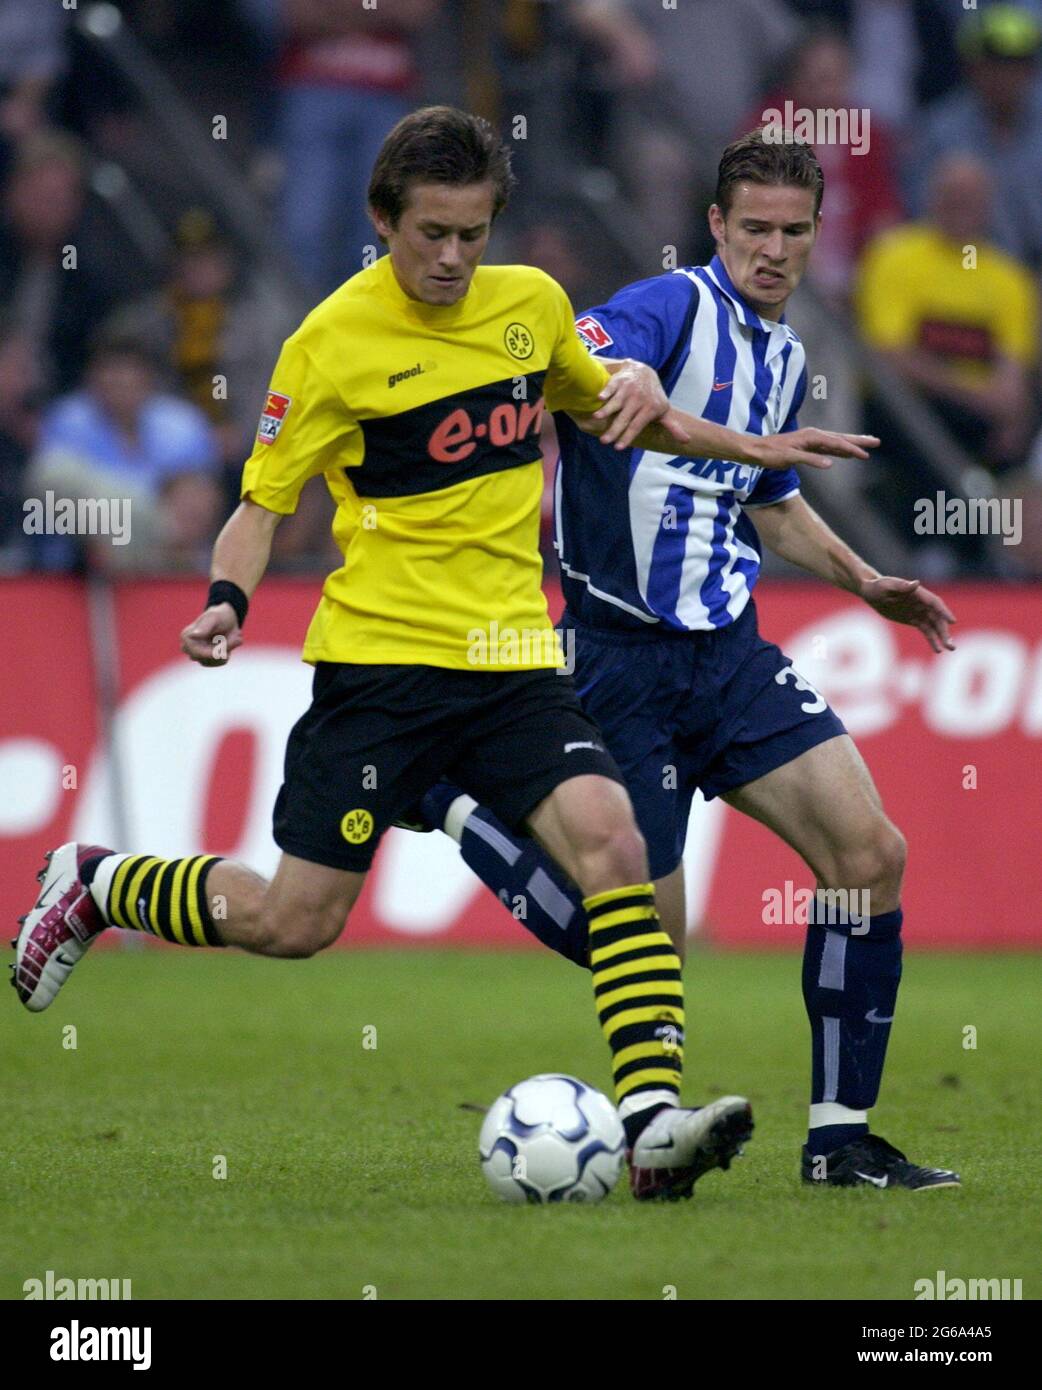 Dortmund, Allemagne,9.8.2002, football: Saison allemande de Bundesliga 2002/2003, Borussia Dortmund (BVB, jaune) vs Hertha BSC (BSC, bleu) 2:2 - THOMAS ROSICY (BVB), ARNE FRIEDRICH (BSC) Banque D'Images